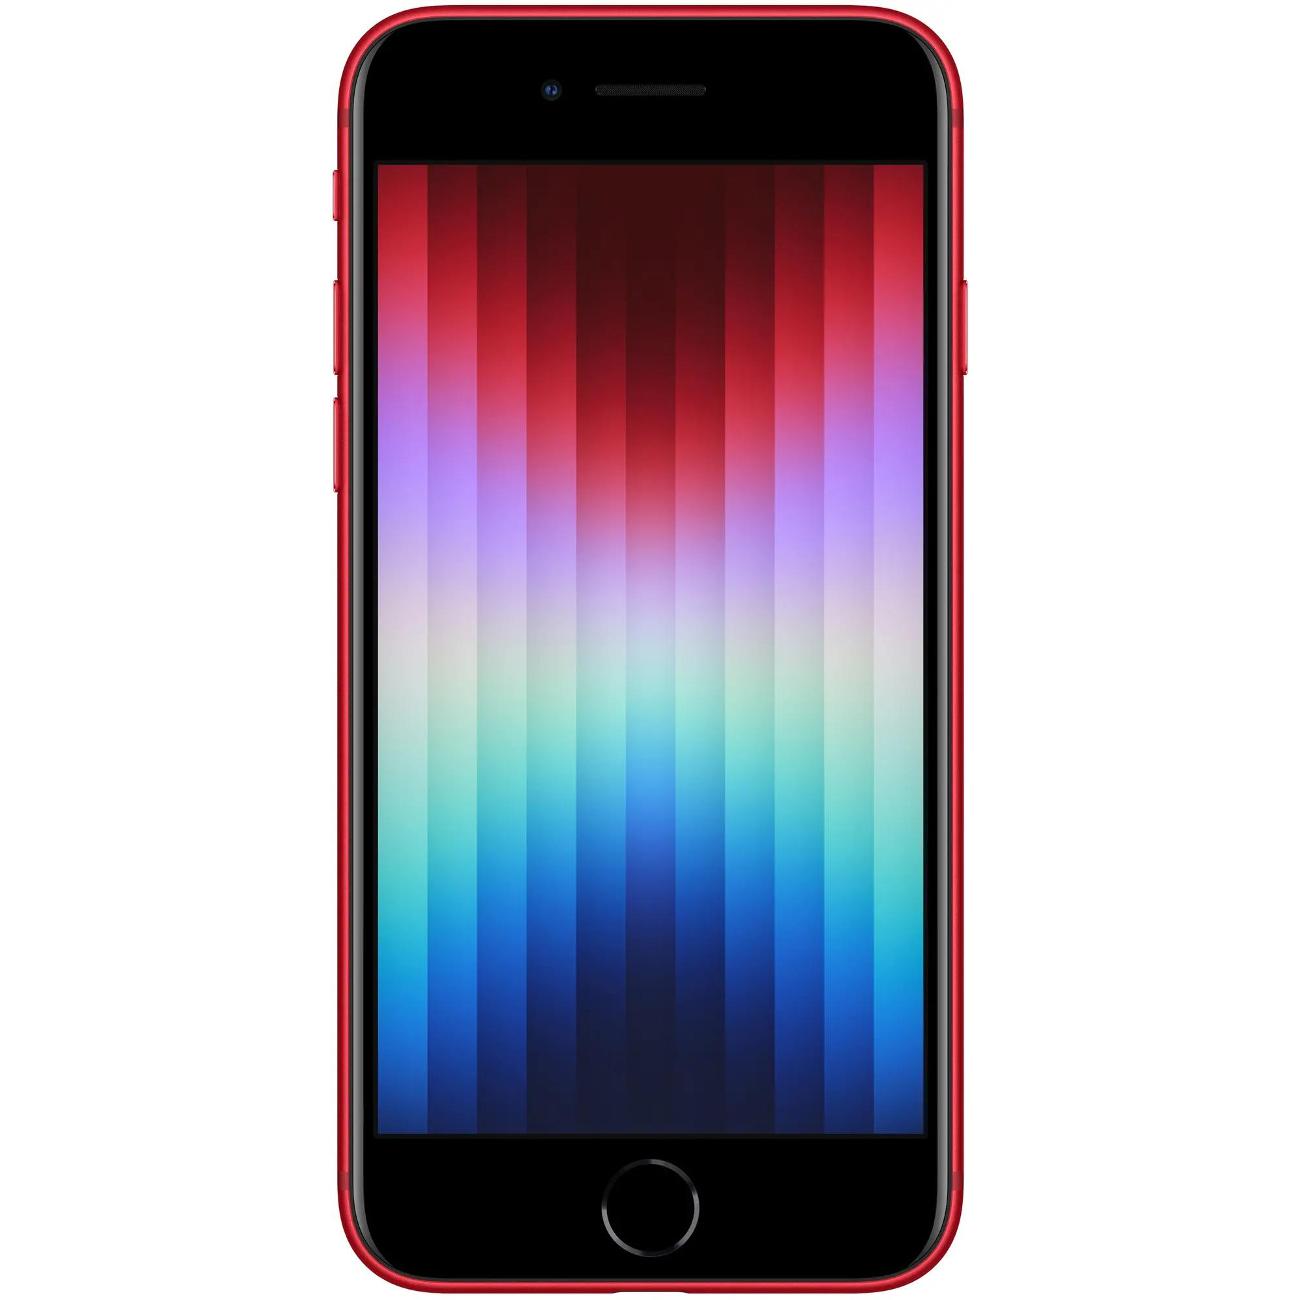 Смартфон Apple iPhone SE (2022) 128GB (ProDUCT)Red - купить смартфон Эпл  iPhone SE (2022) 128GB (ProDUCT)Red, цены в интернет-магазине Эльдорадо в  Москве, доставка по РФ